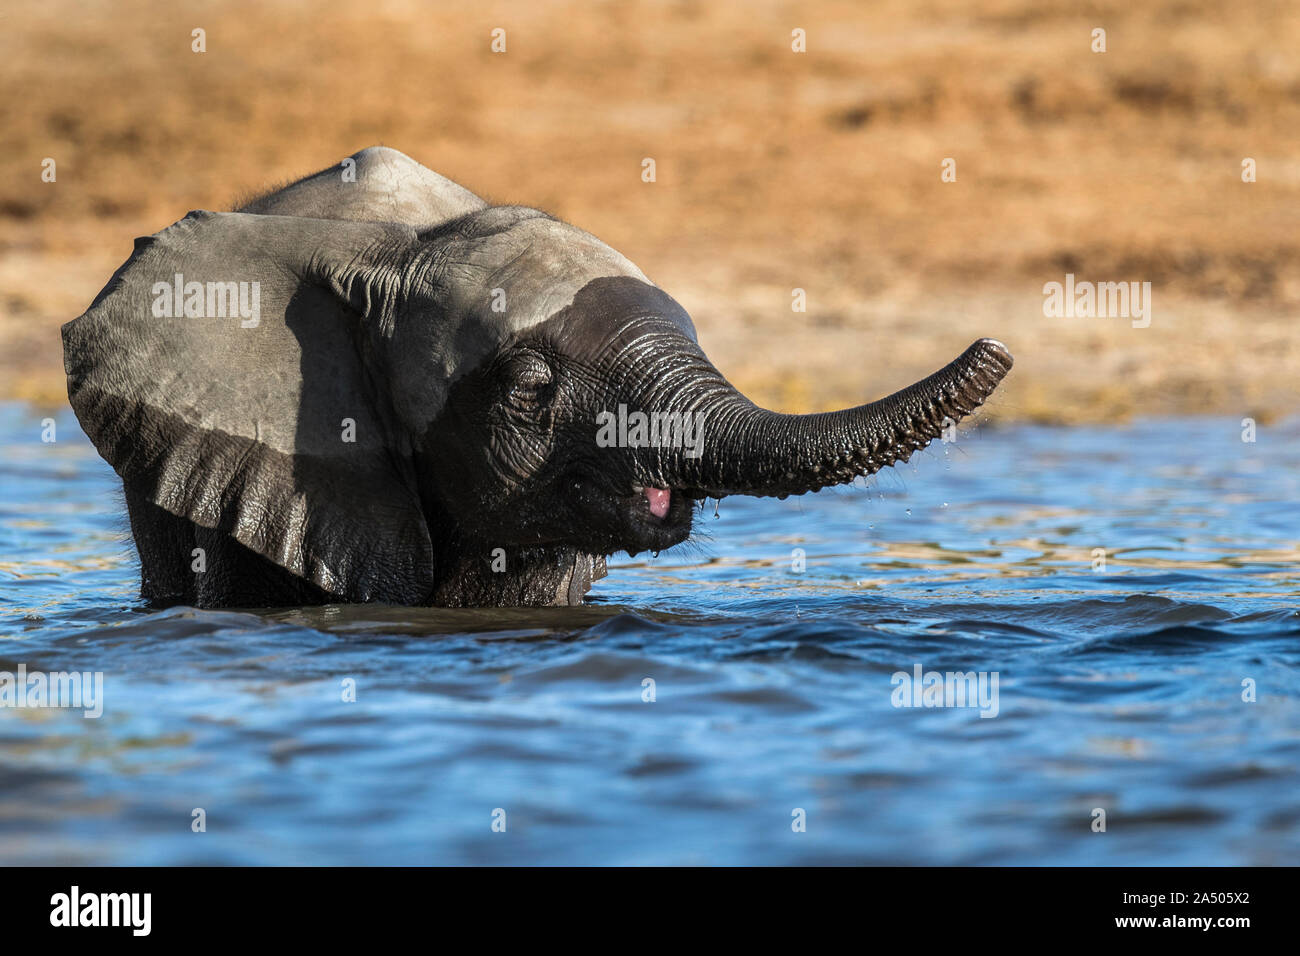 African elephant (Loxodonta africana) calf in water, Chobe national park, Botswana Stock Photo